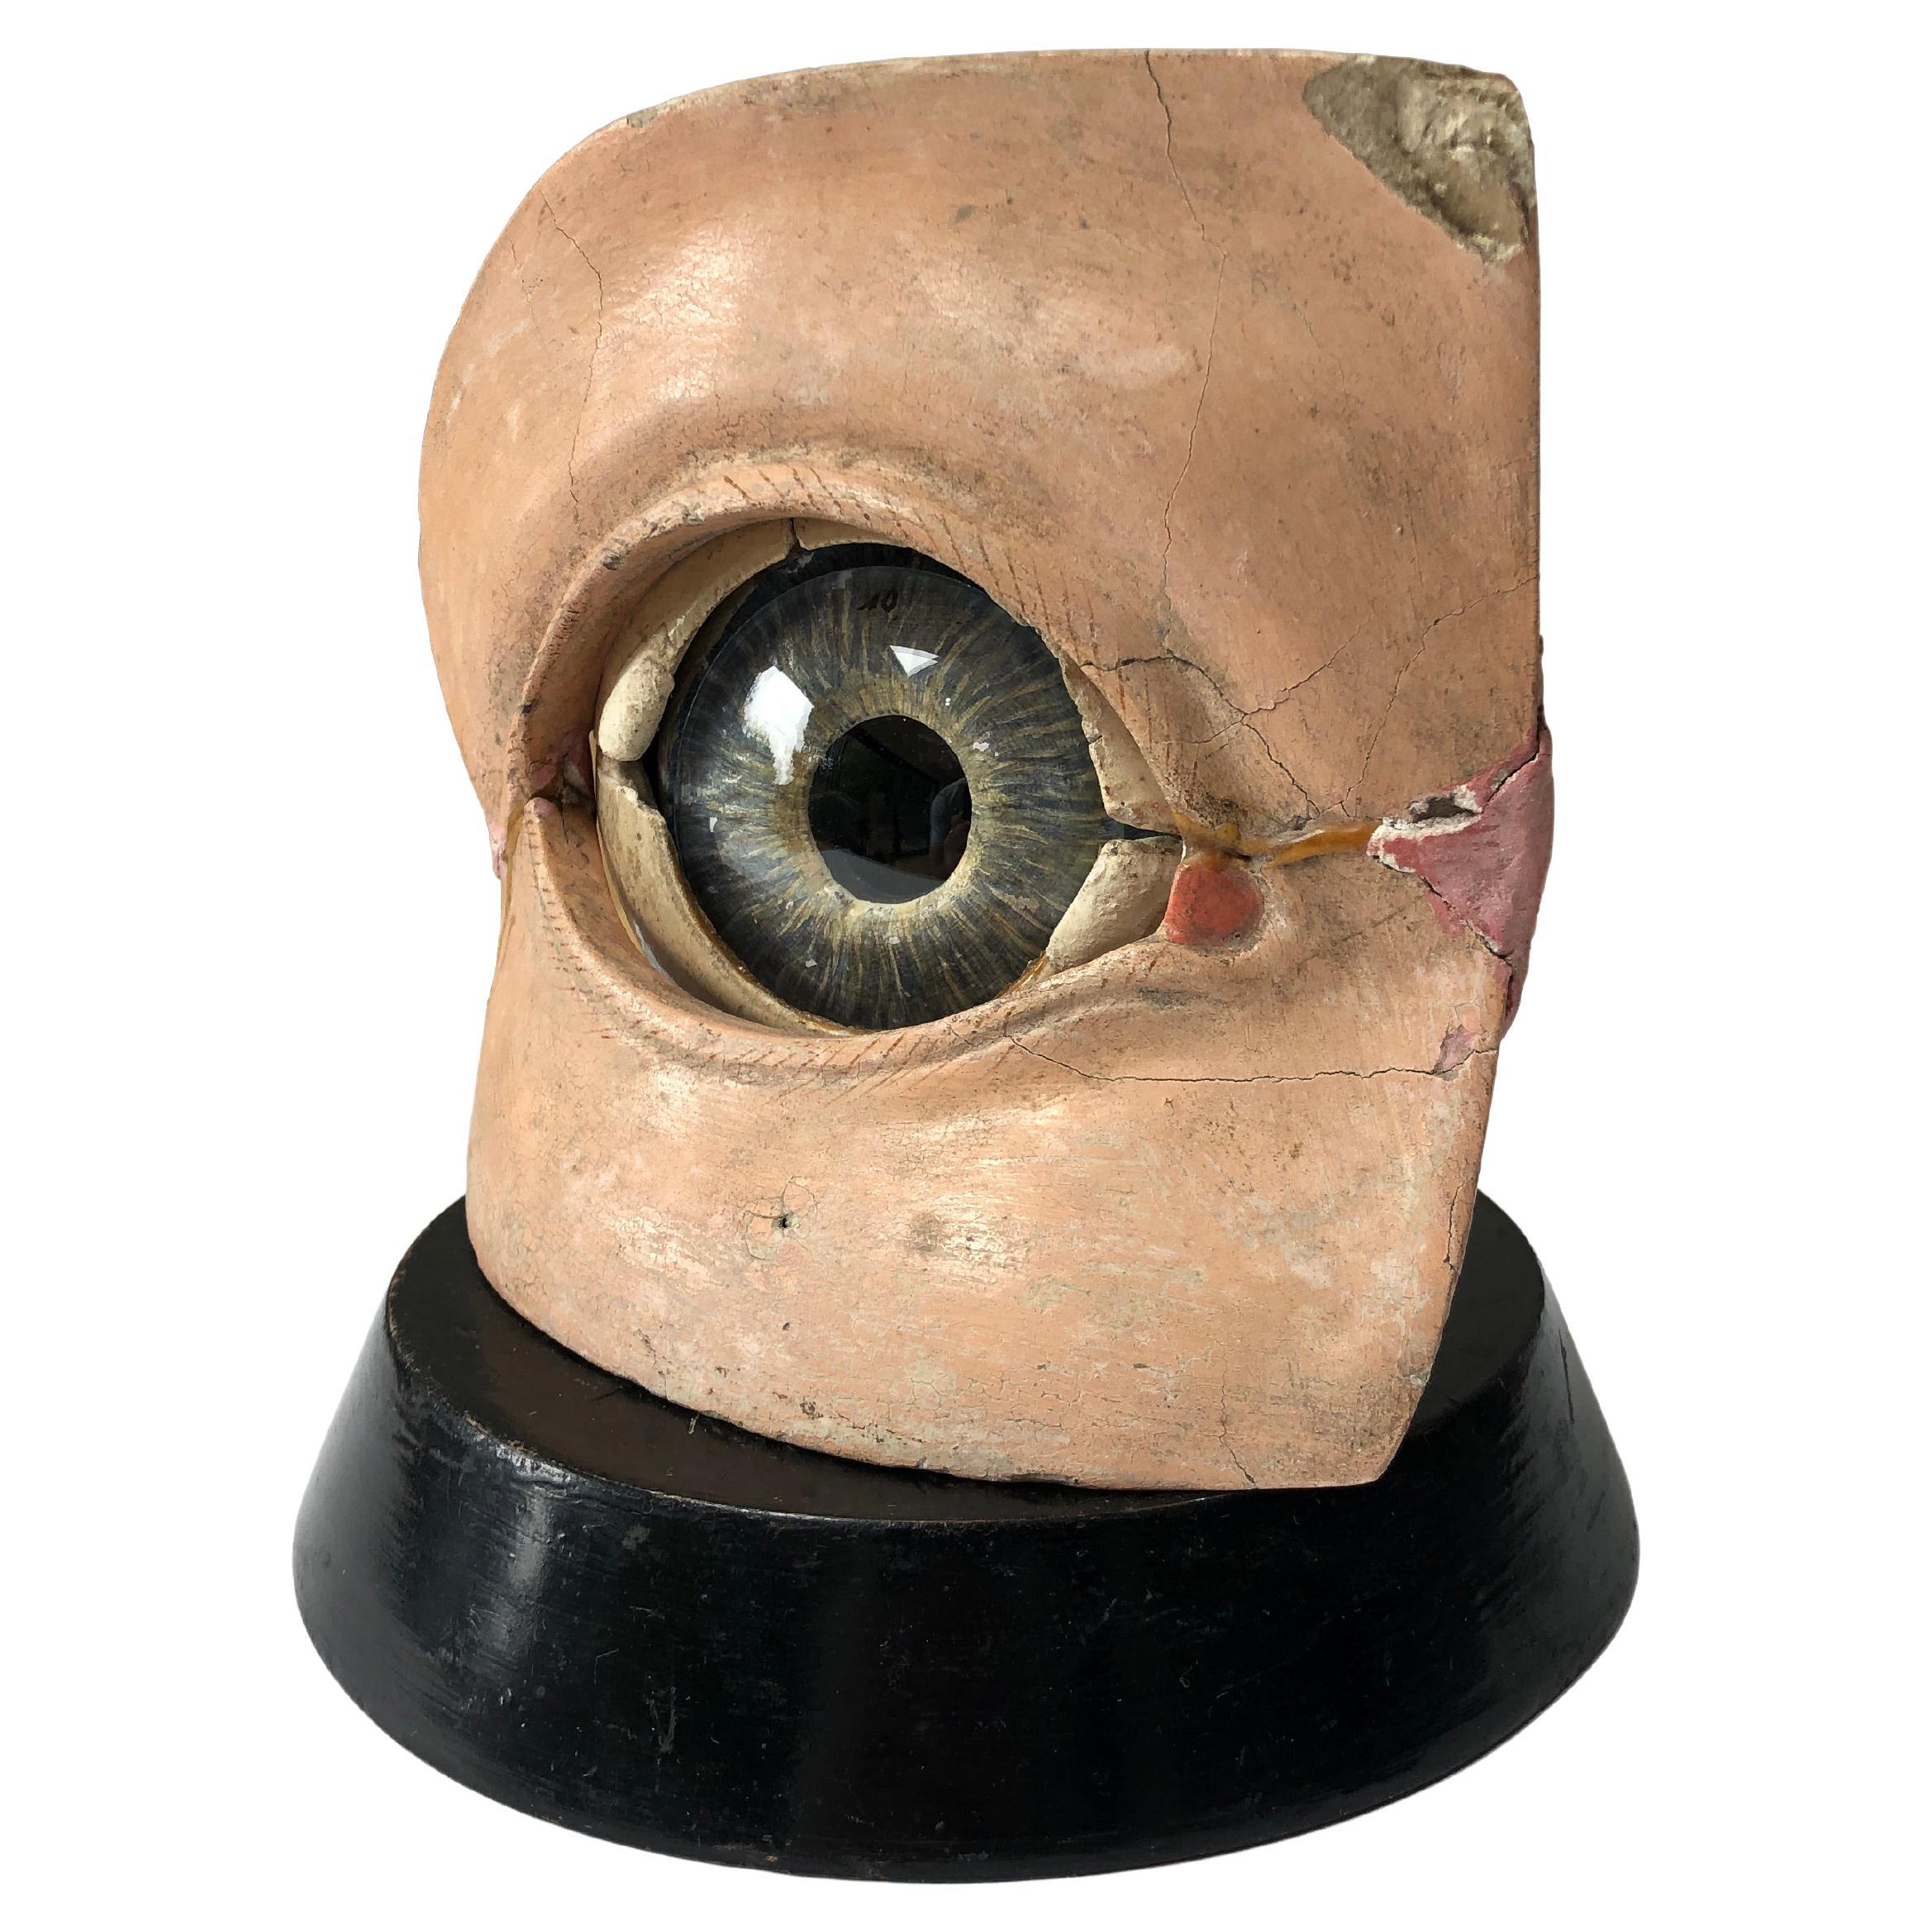 Antique Vintage Anatomical Hand Painted Plaster Papier-mâché Model of the Eye